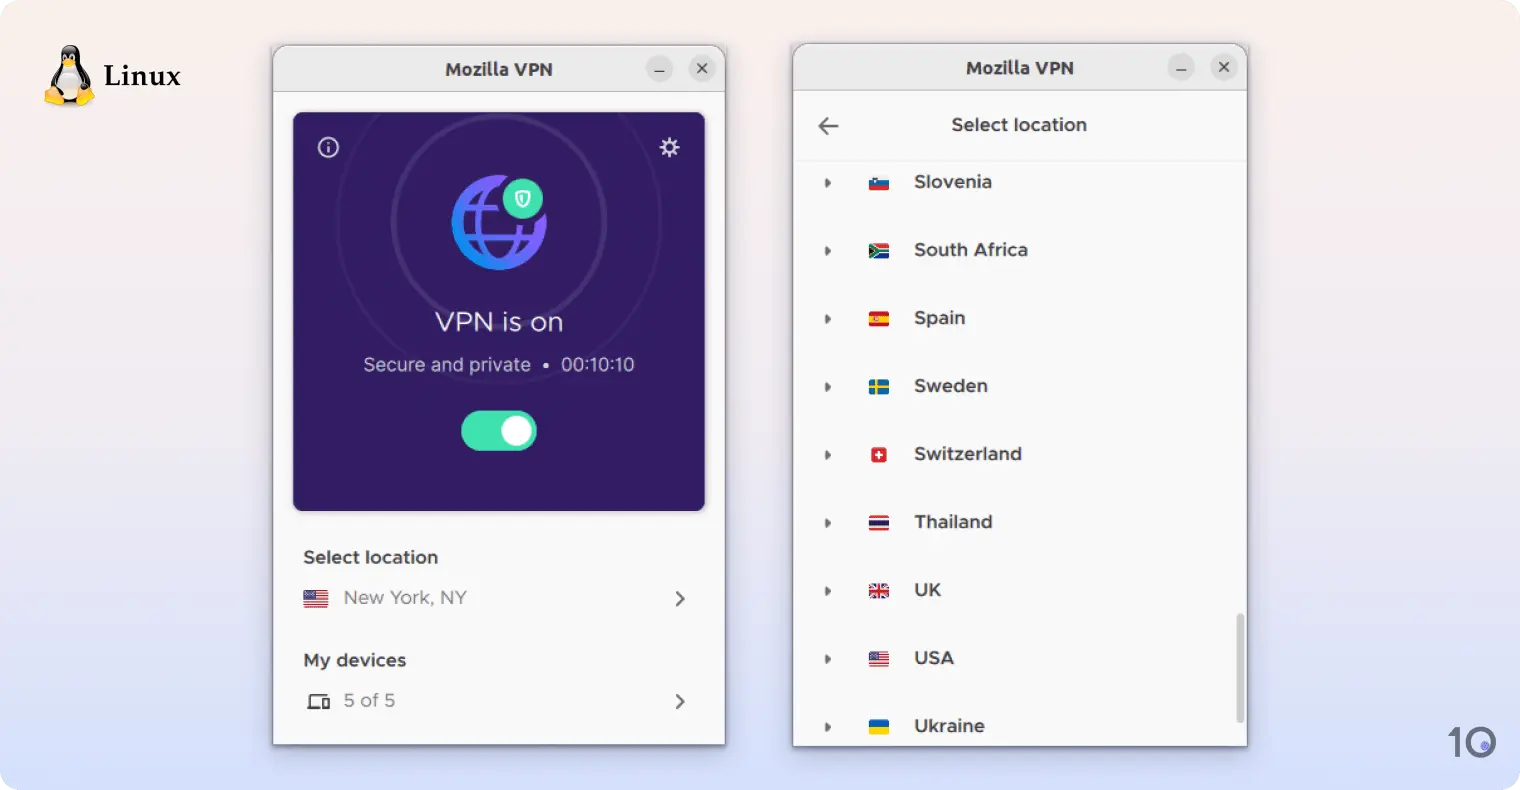 Mozilla VPN's app for Linux